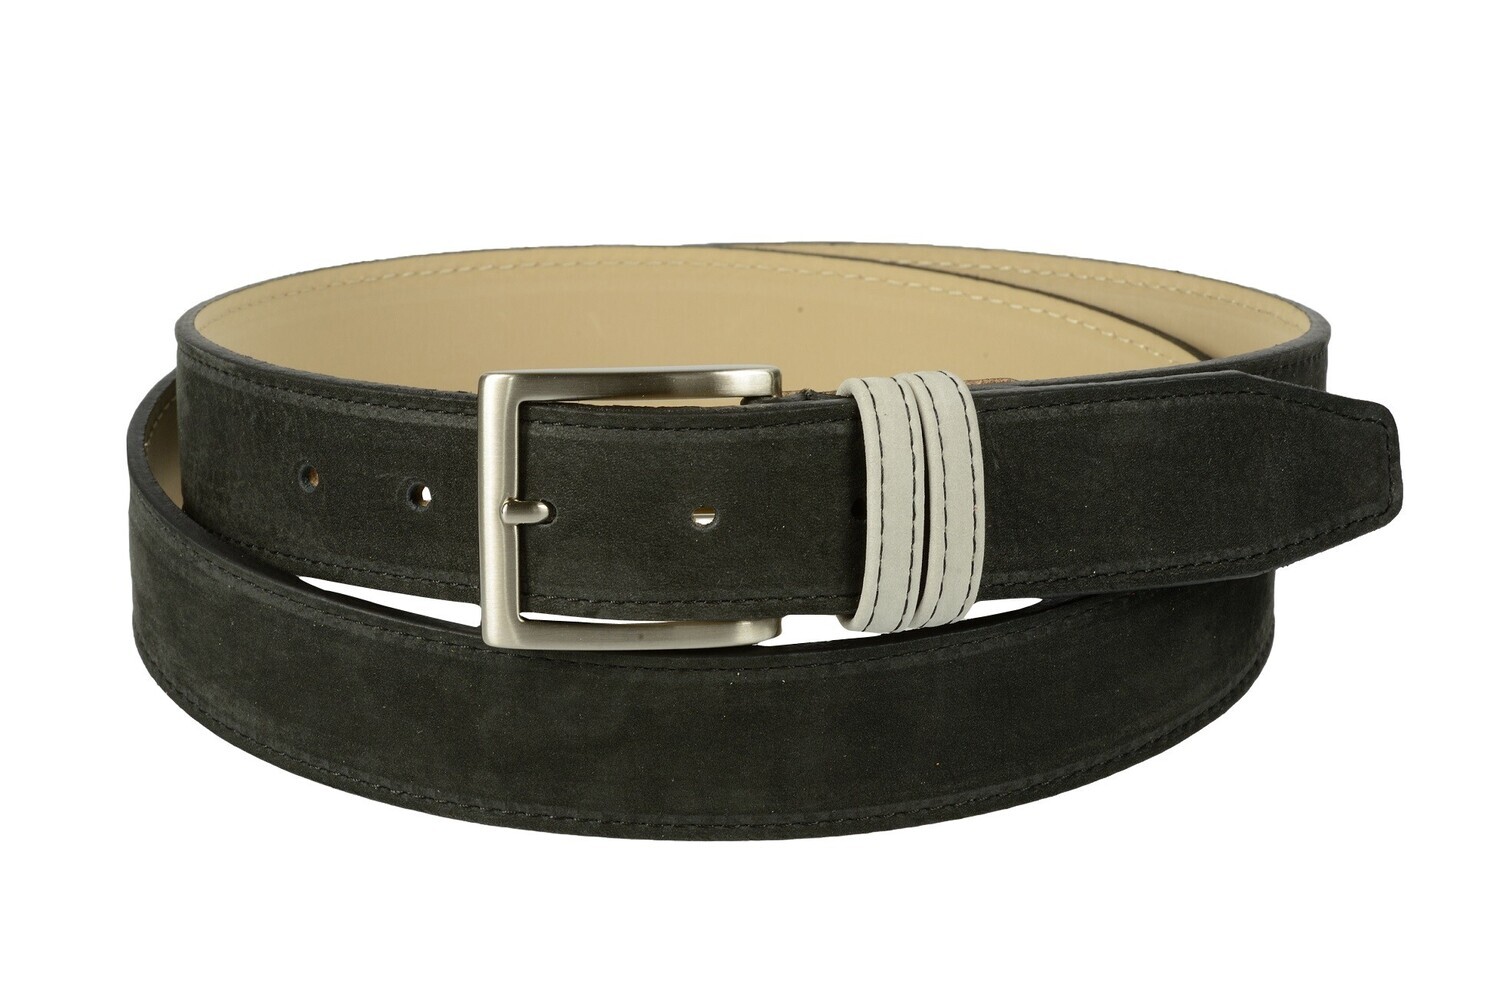 Cintura bicolore in pelle nabuk: nera con passante grigio